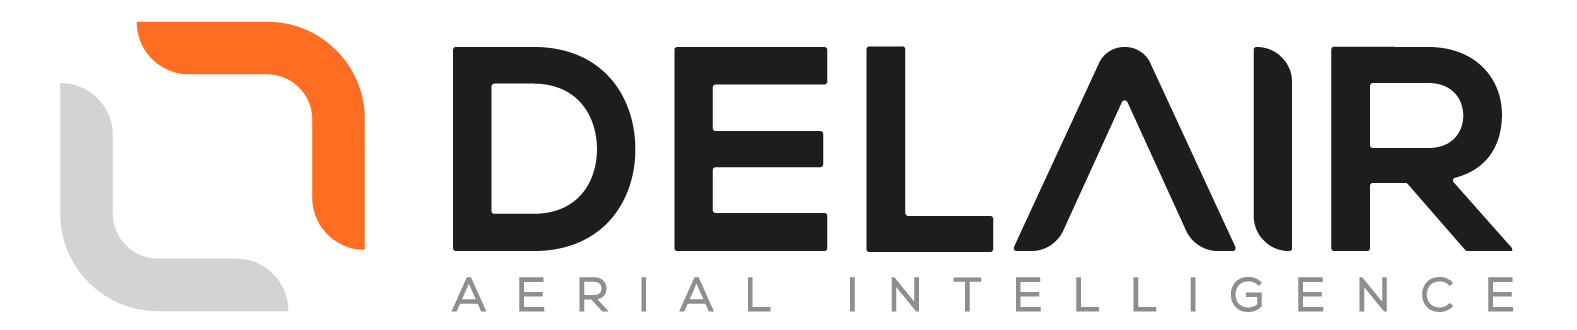 Delair Logo linked to website